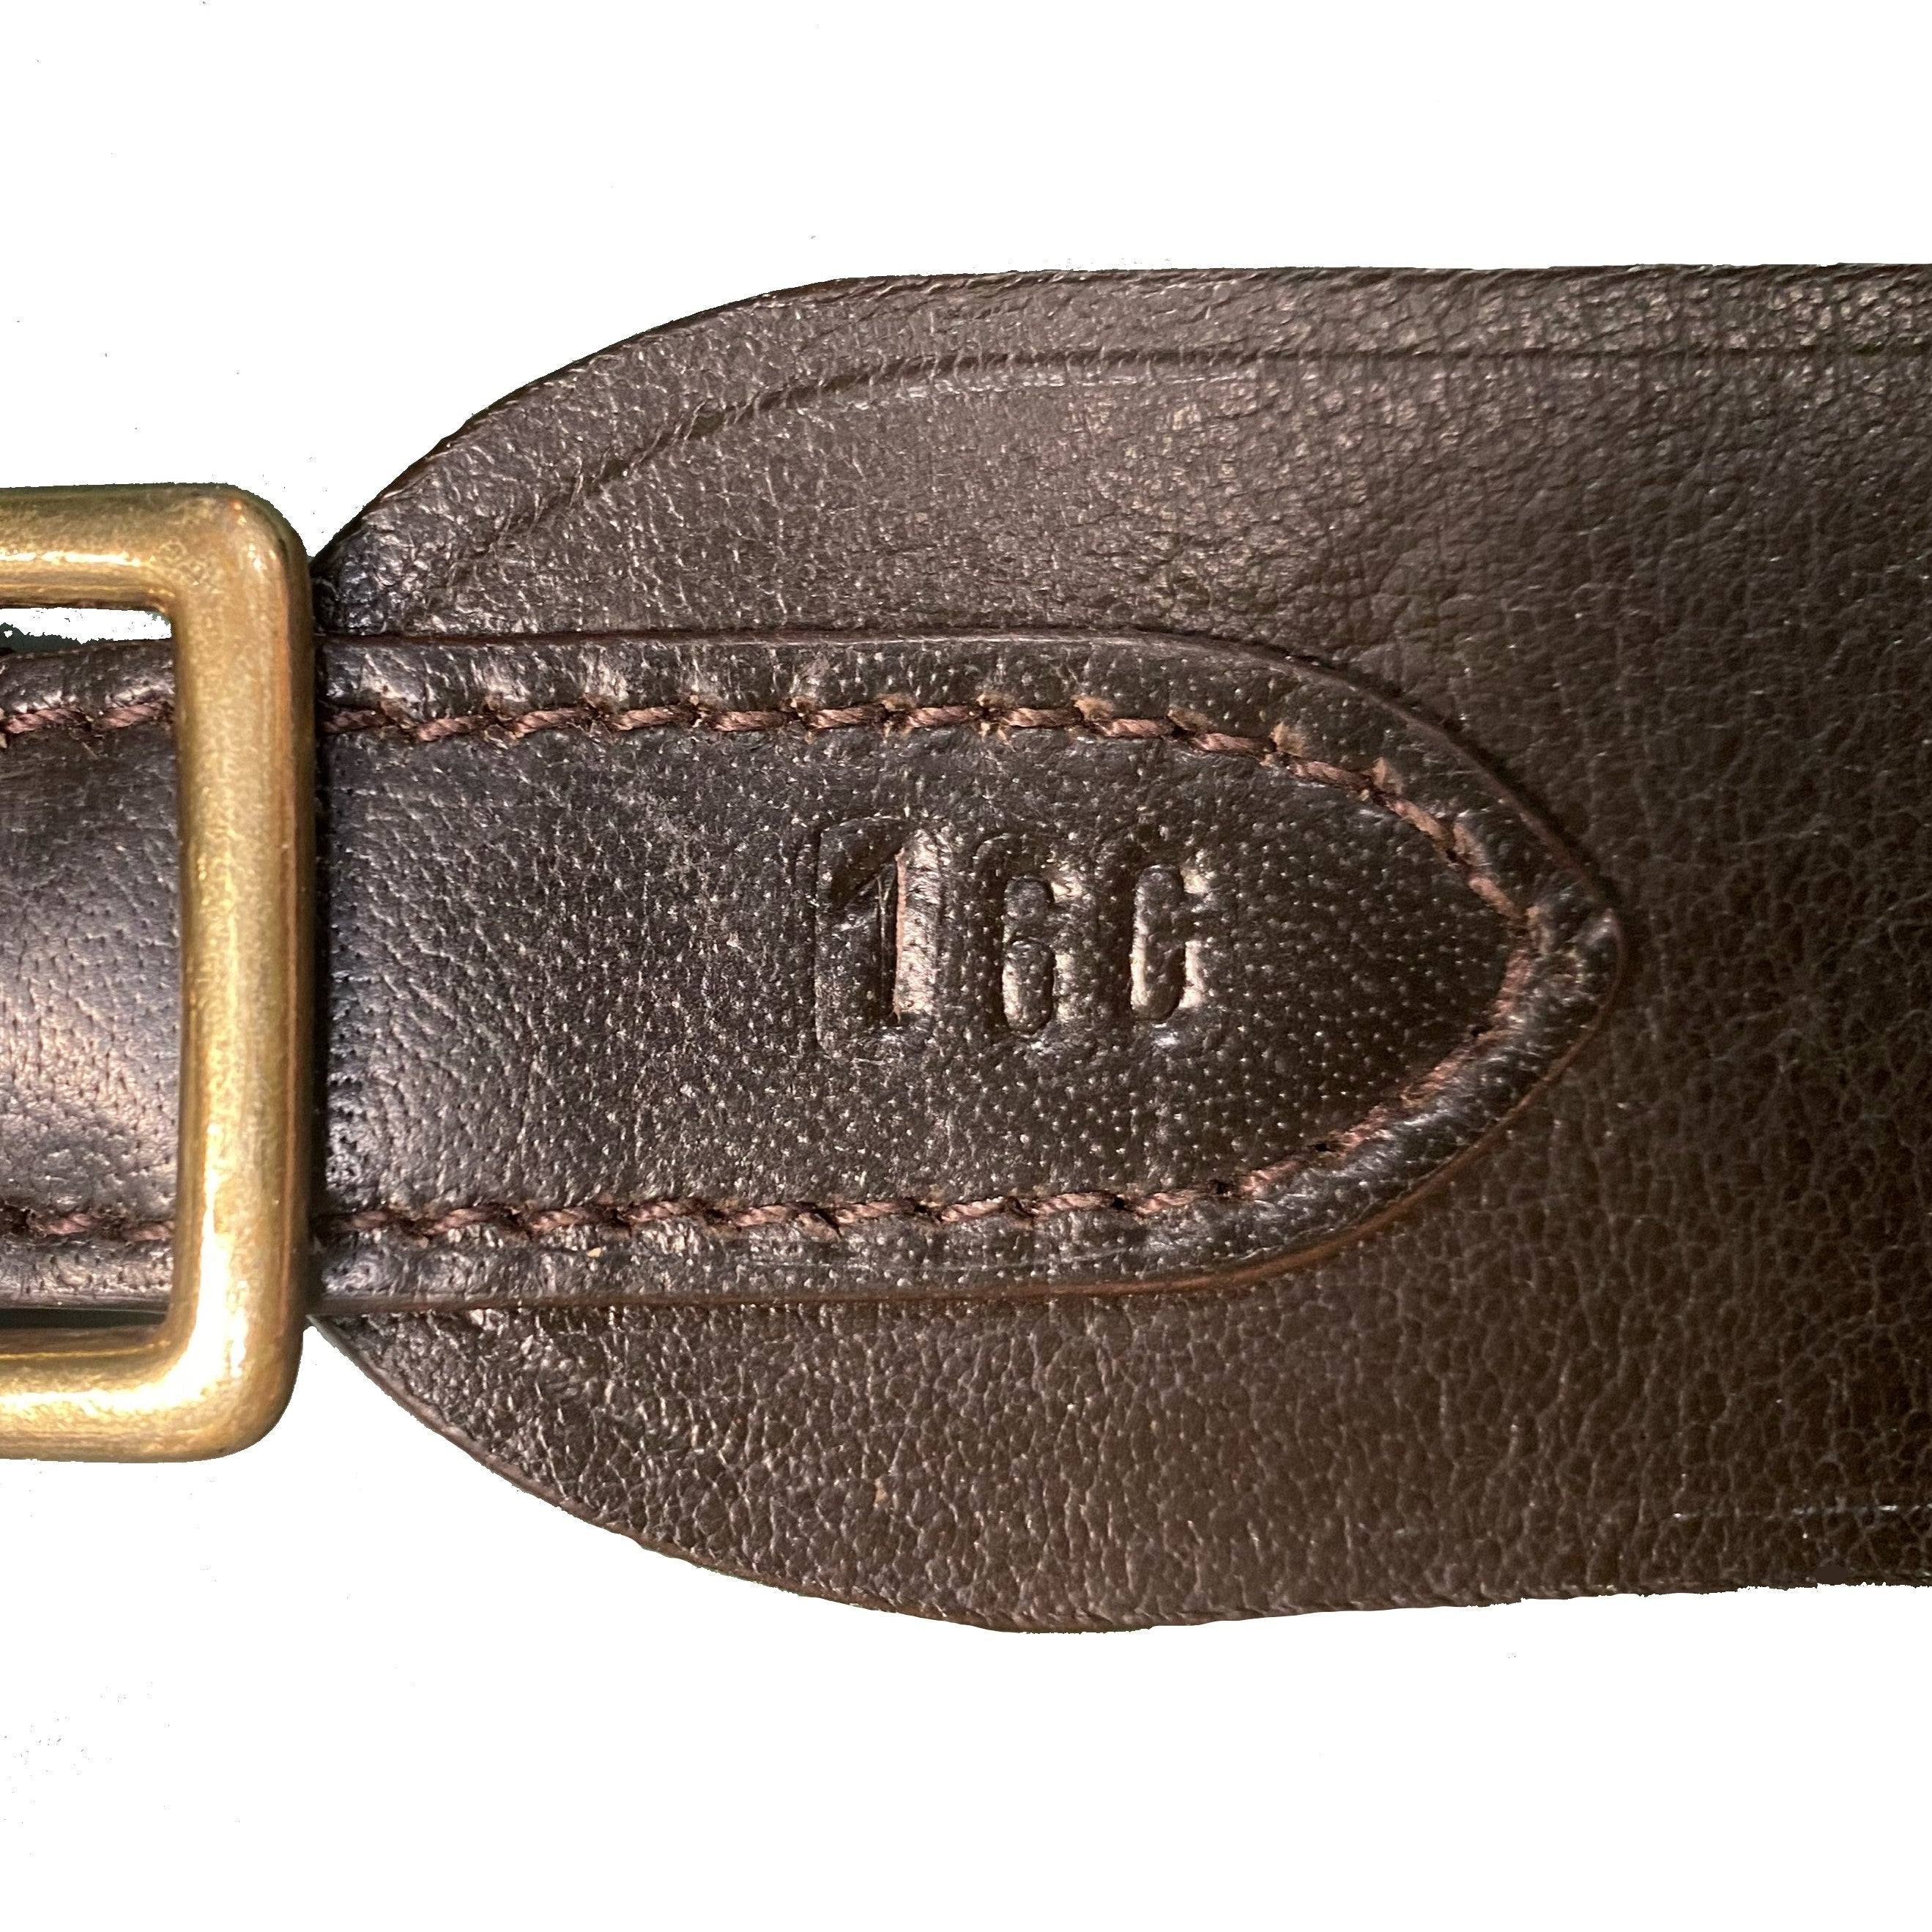 William Powell Open Loop Adjustable Leather Cartridge Belt - 16 Bore